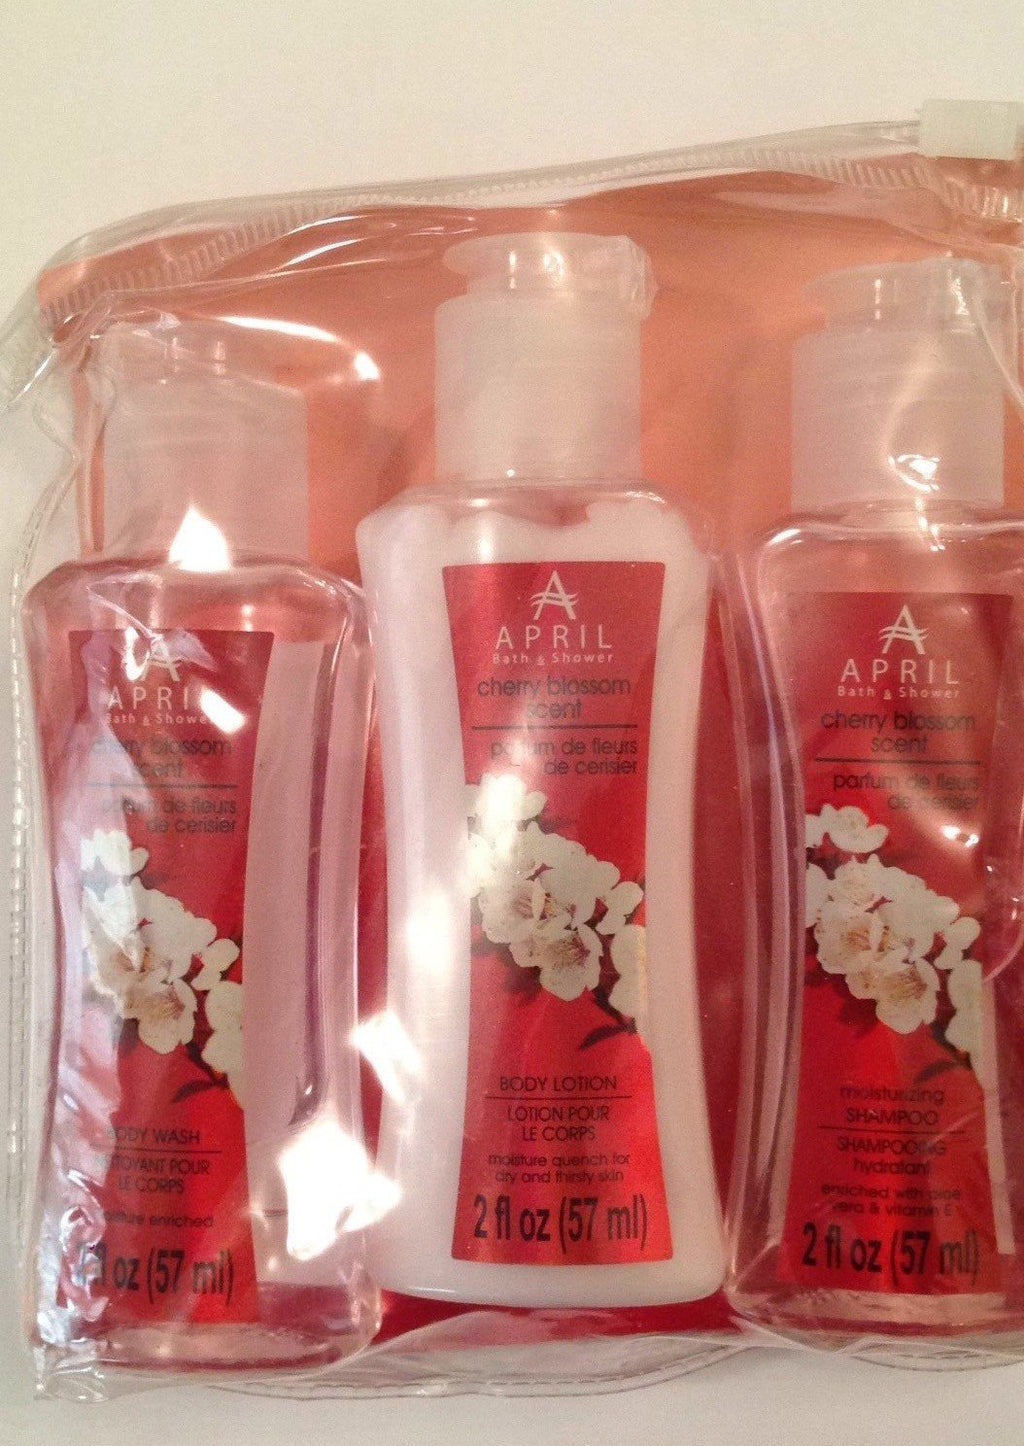 April Bath & Shower Cherry Blossom Scent Body Wash / Body Lotion / Shampoo Set 2 Fl Oz. Each - BeesActive Australia